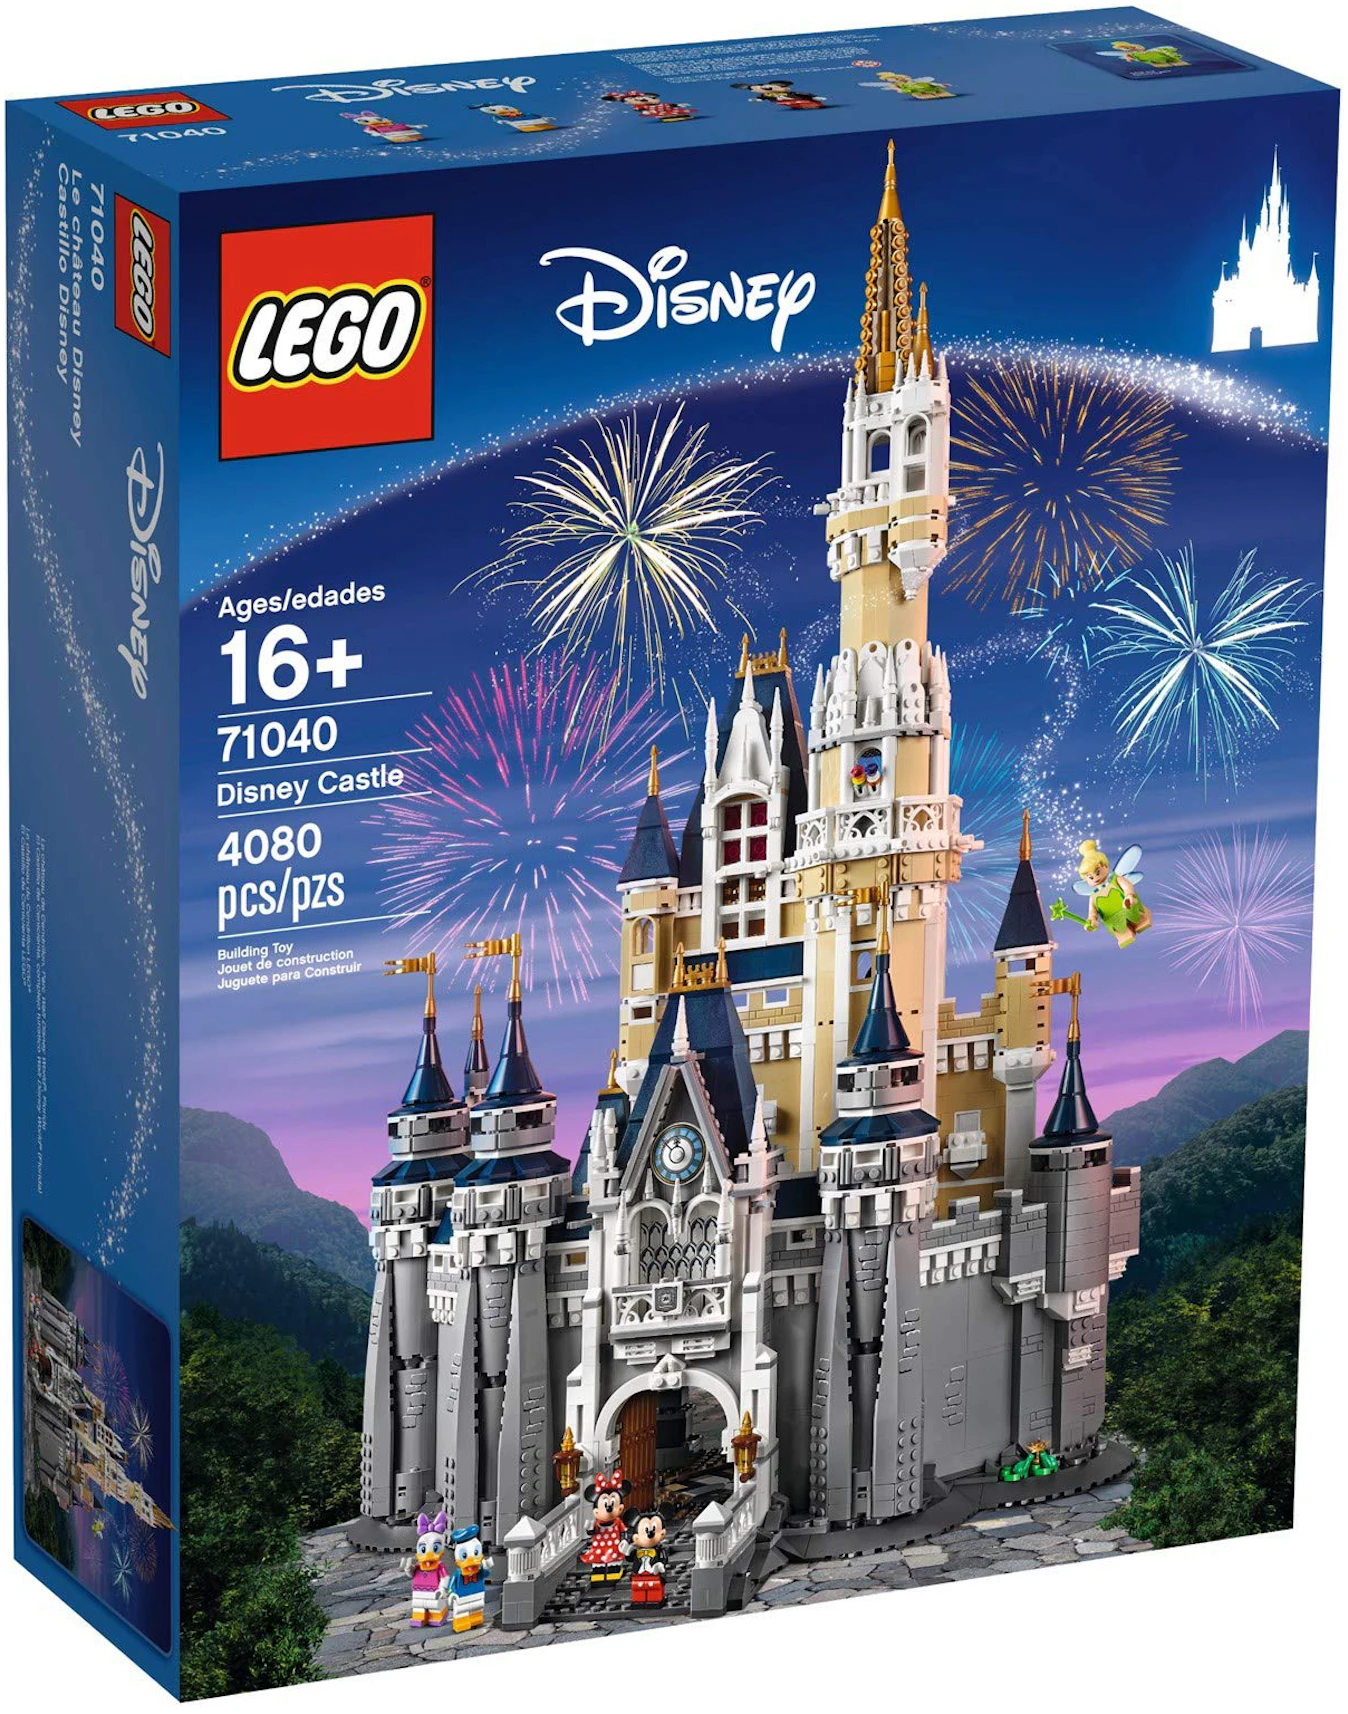 verbanning pion dictator LEGO The Disney Castle Set 71040 - US